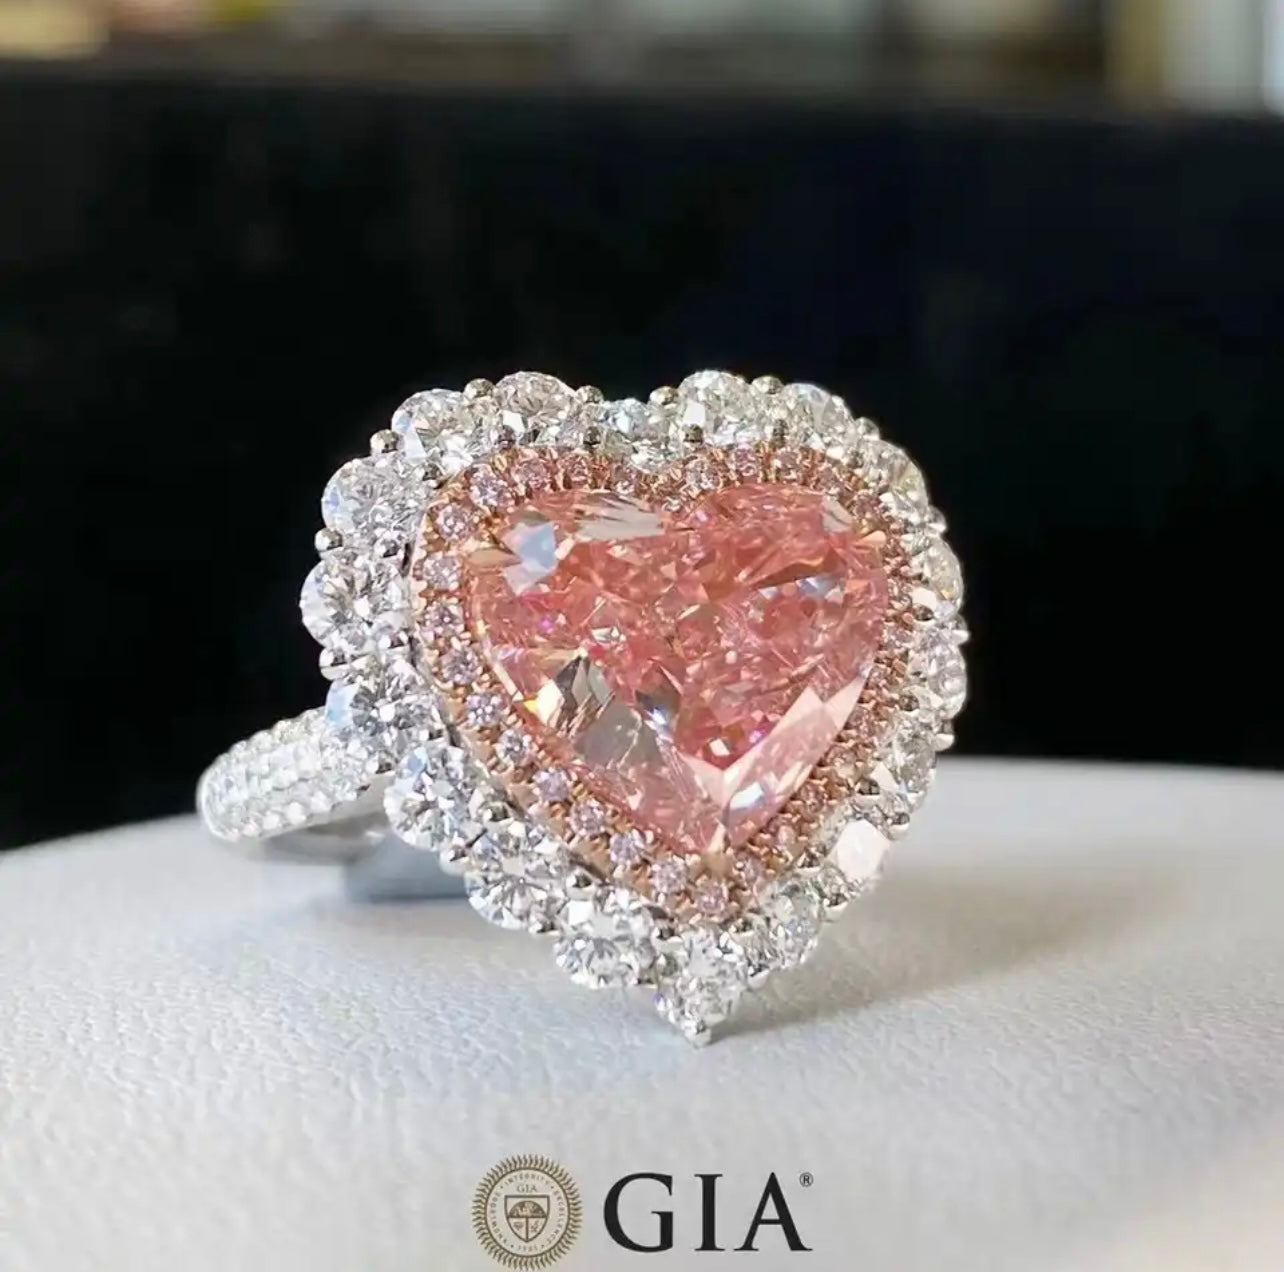 10 Carat Argyle Fancy Intense Pink Brilliant Heart Cut Diamond Ring